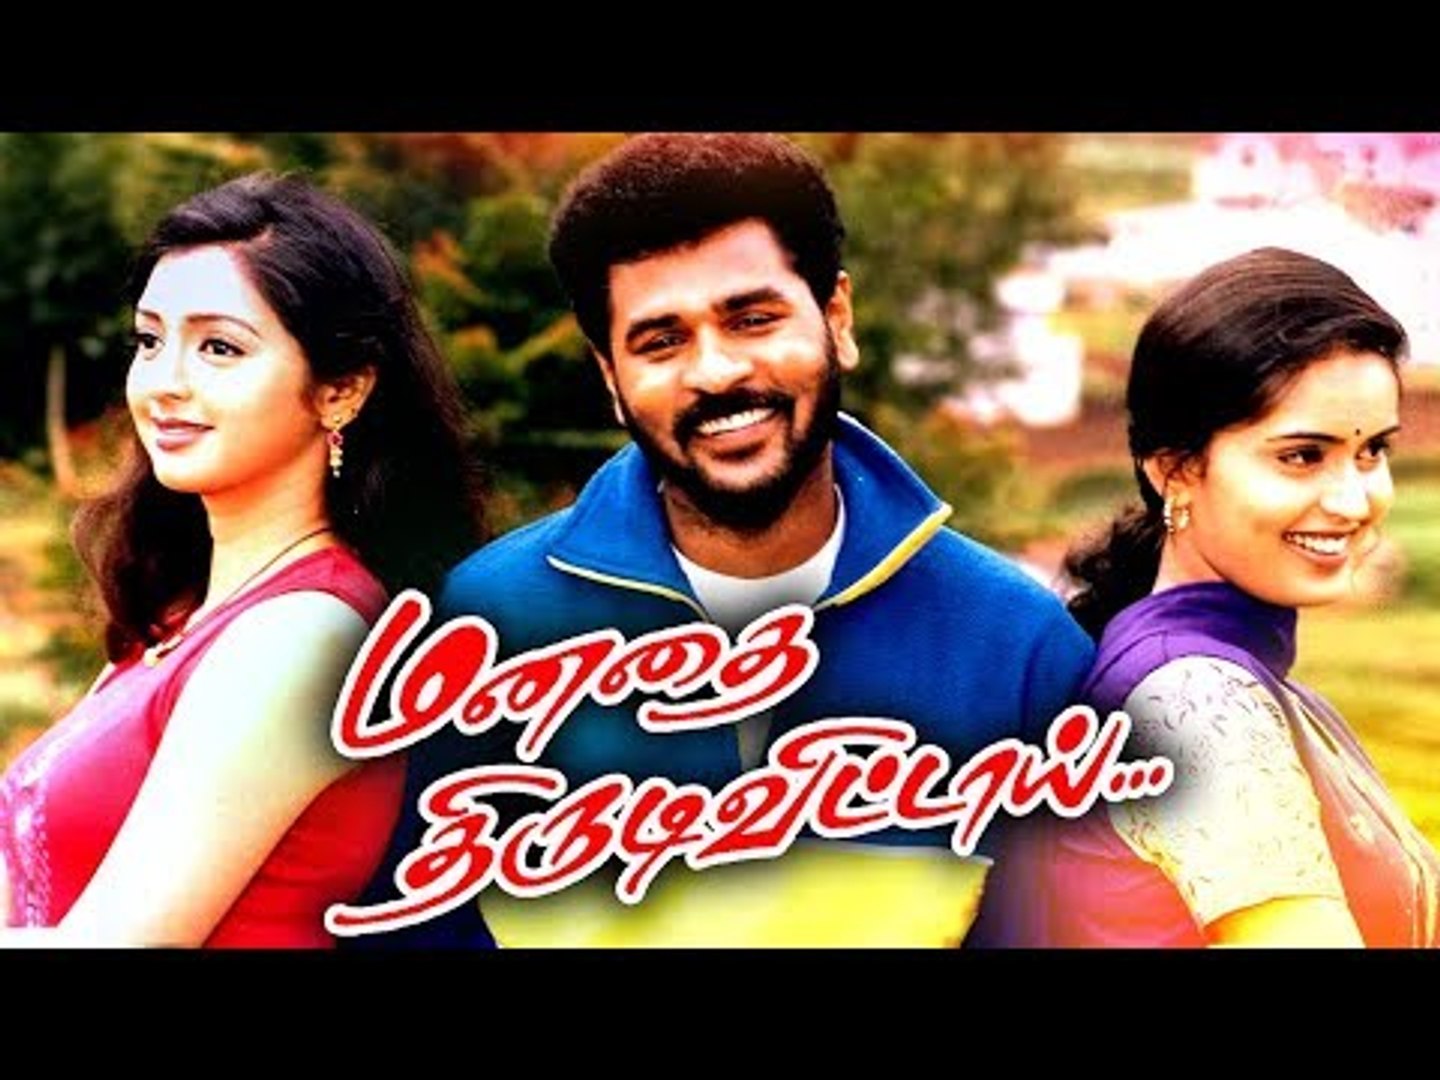 Manadhai Thirudivittai Full Movie| Tamil New Movies 2017 | Tamil Comedy Movies| Prabhu Deva,Vadivelu